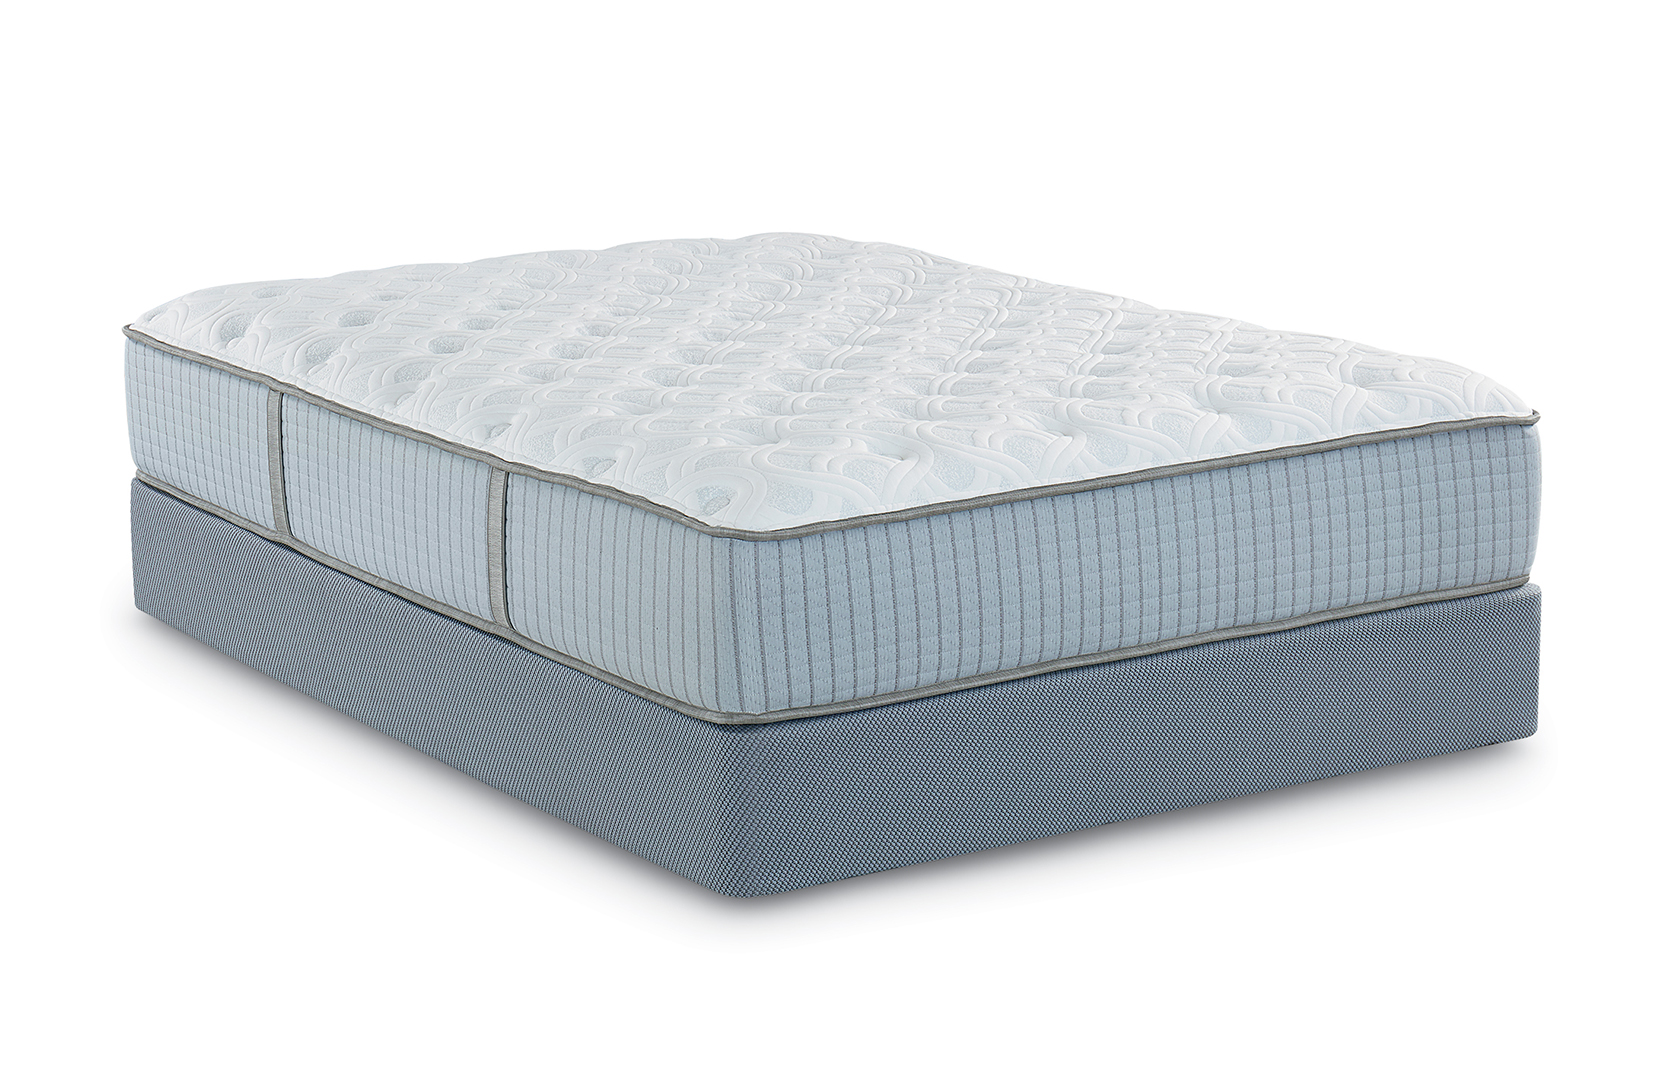 biltmore pillowtop mattress.pad on ebay